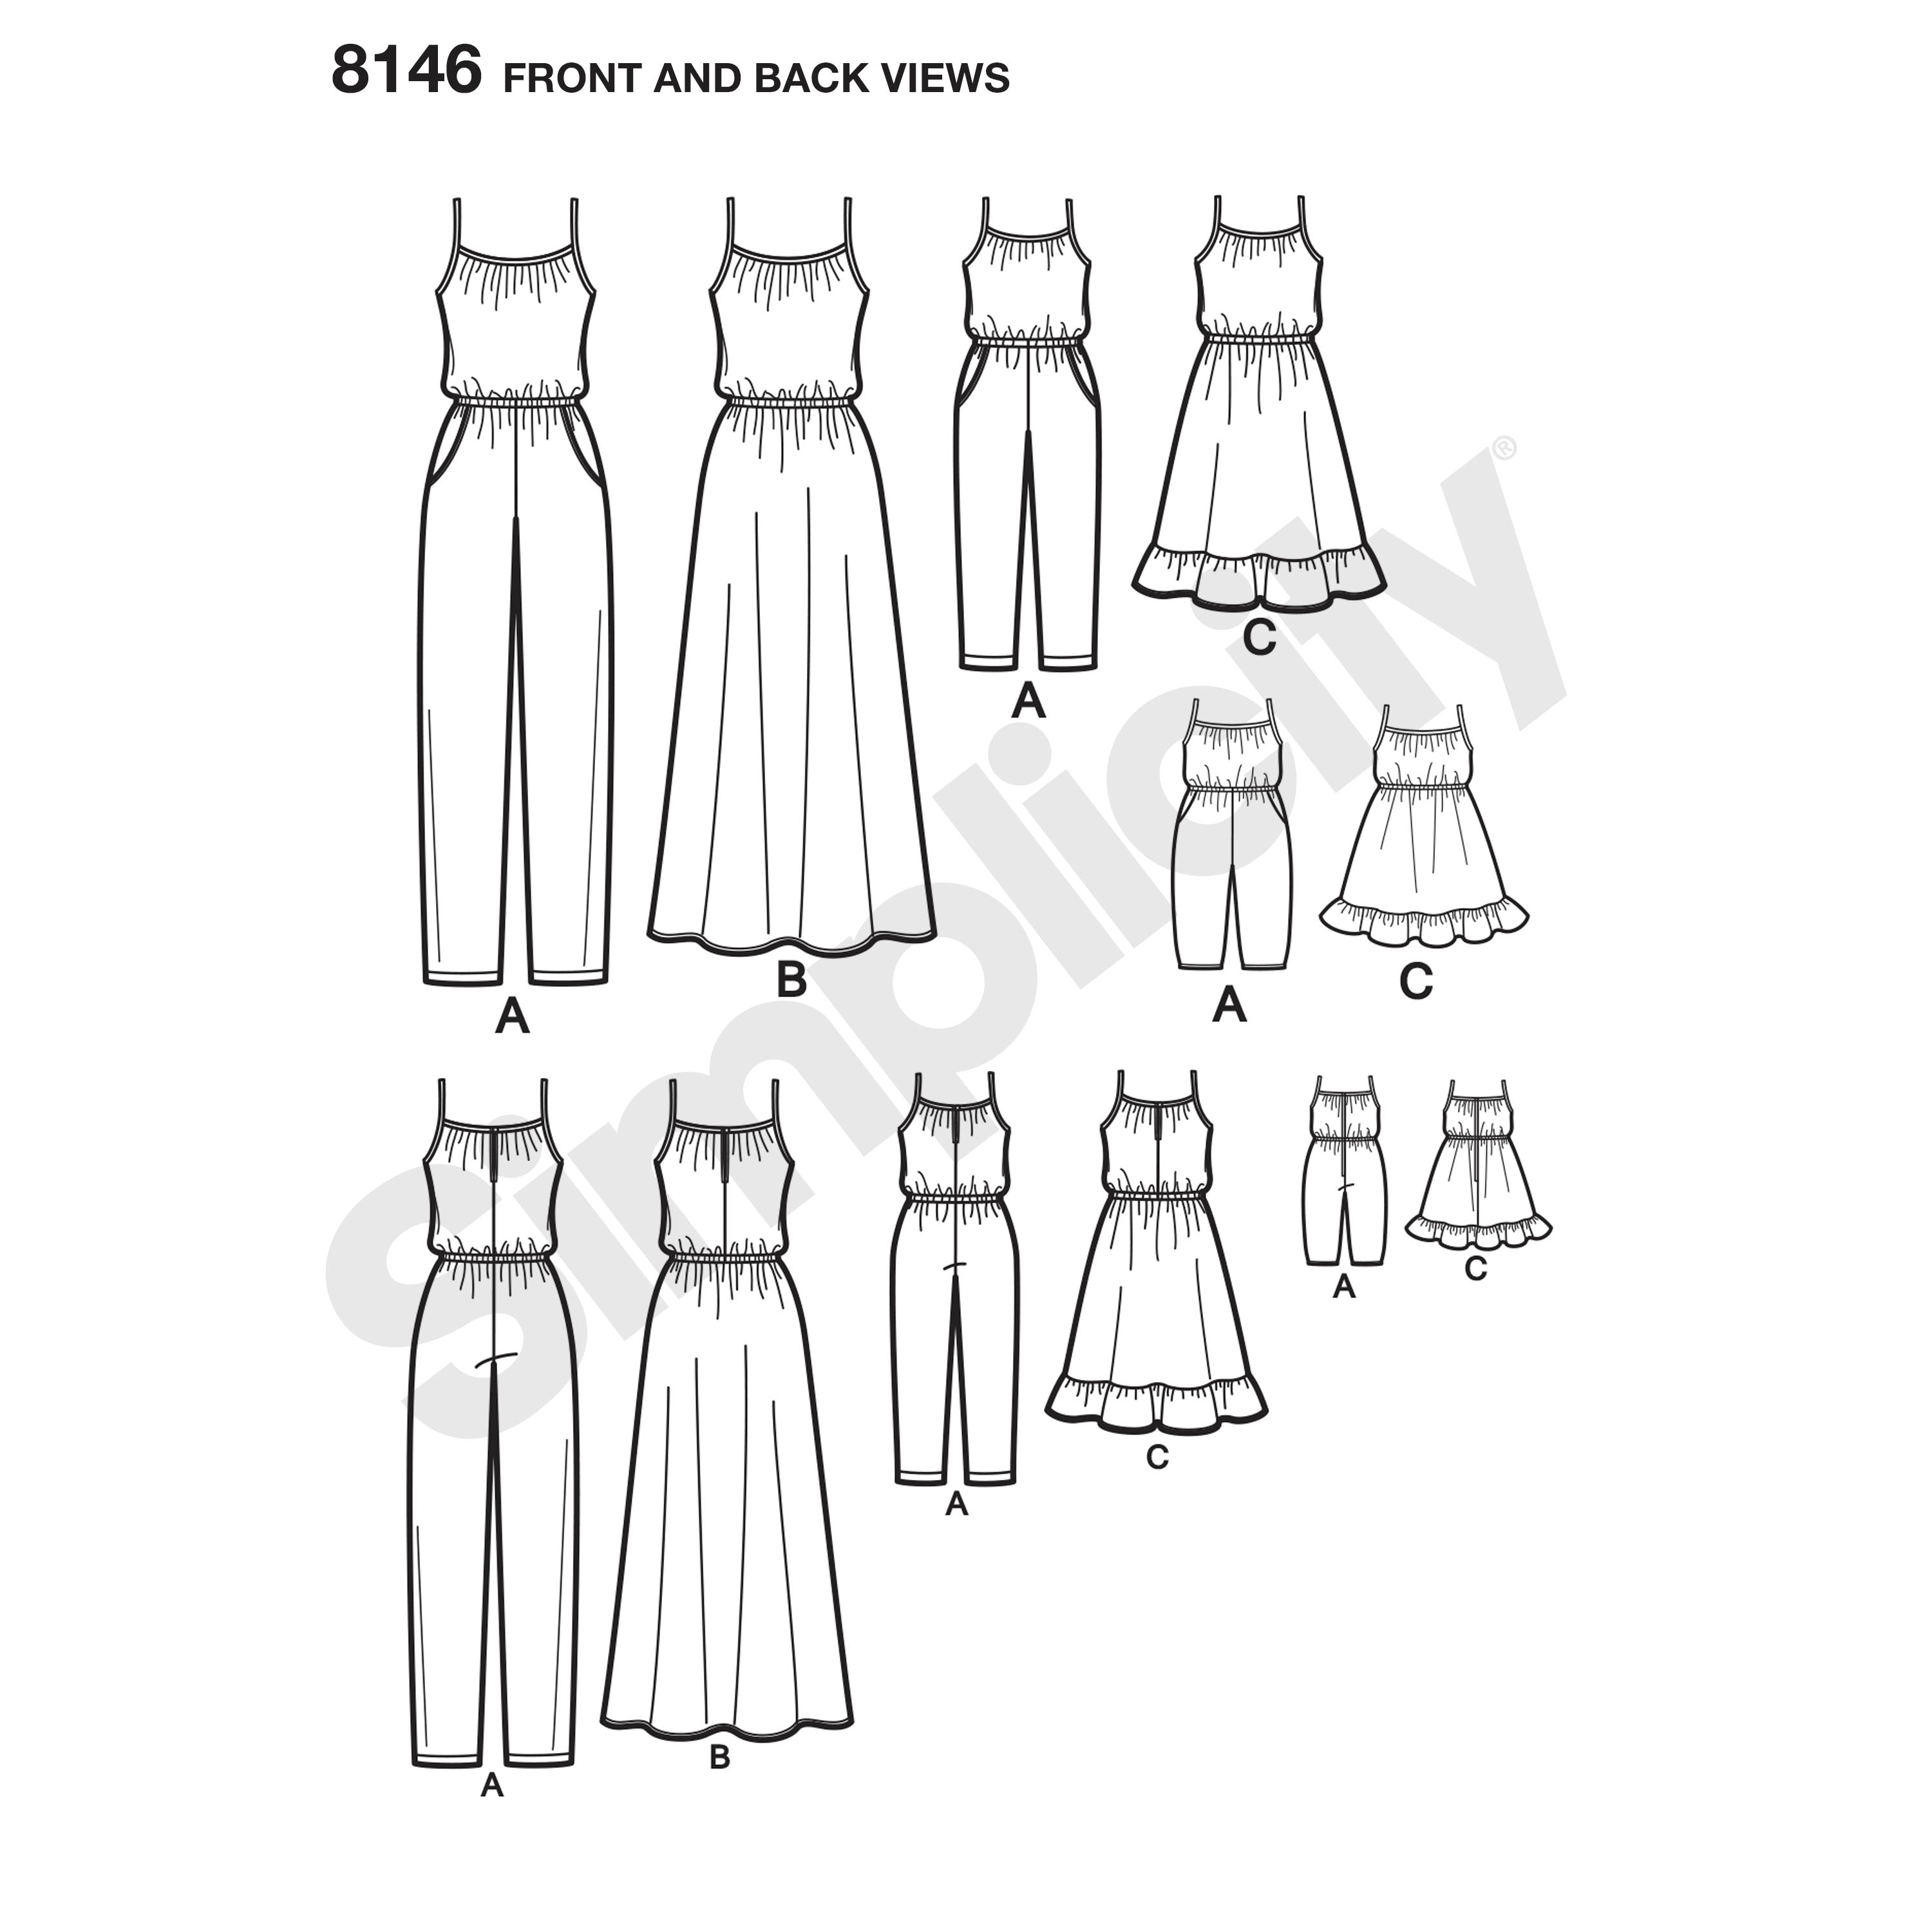 Simplicity Women/Girl Jumpsuit & Dress S8146